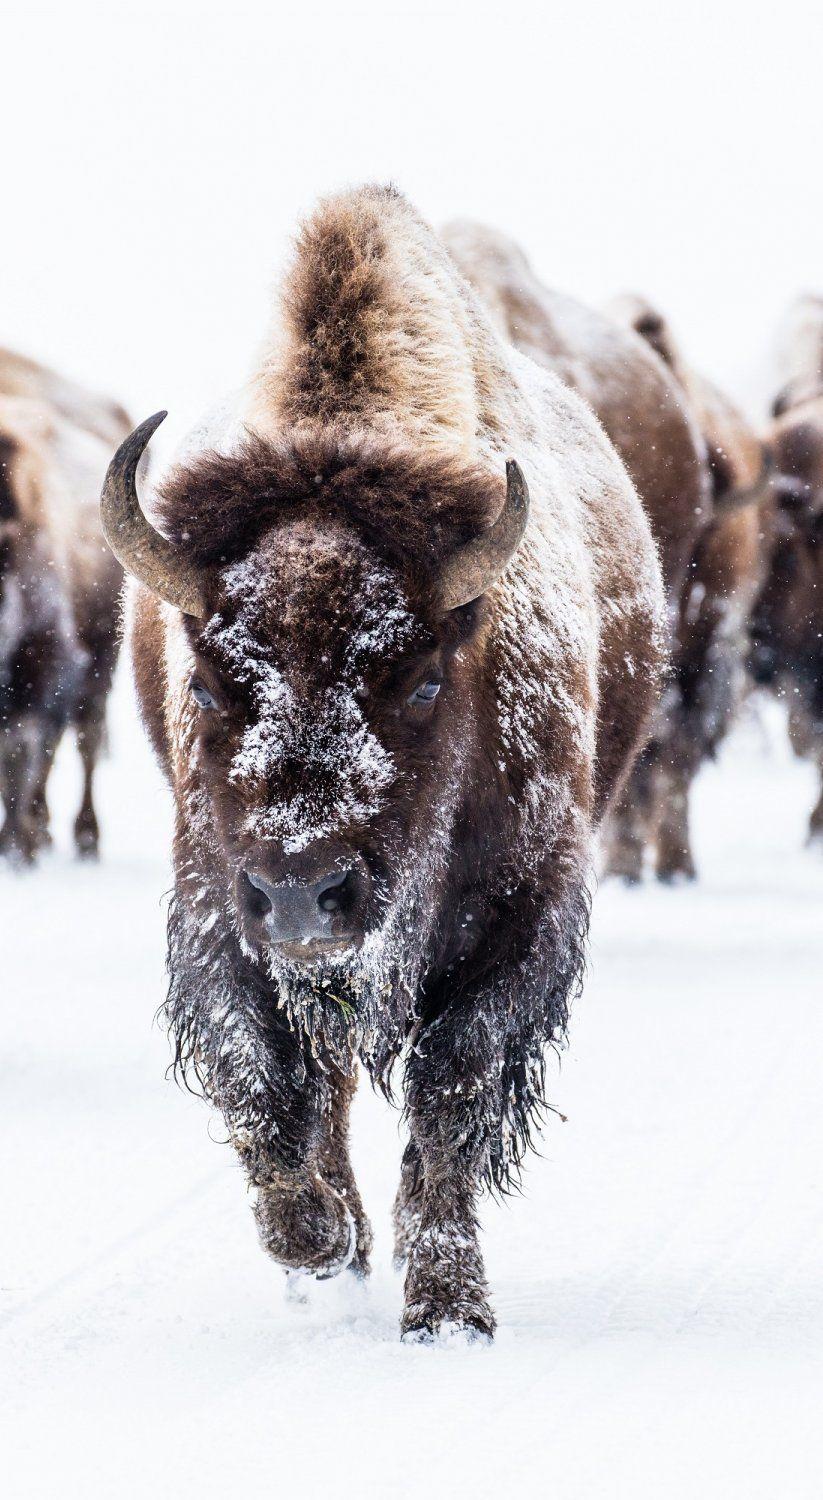 Bison Buffalo Group Herd Snow Walking Landscape Outdoors. Buffalo, Bison, Herding